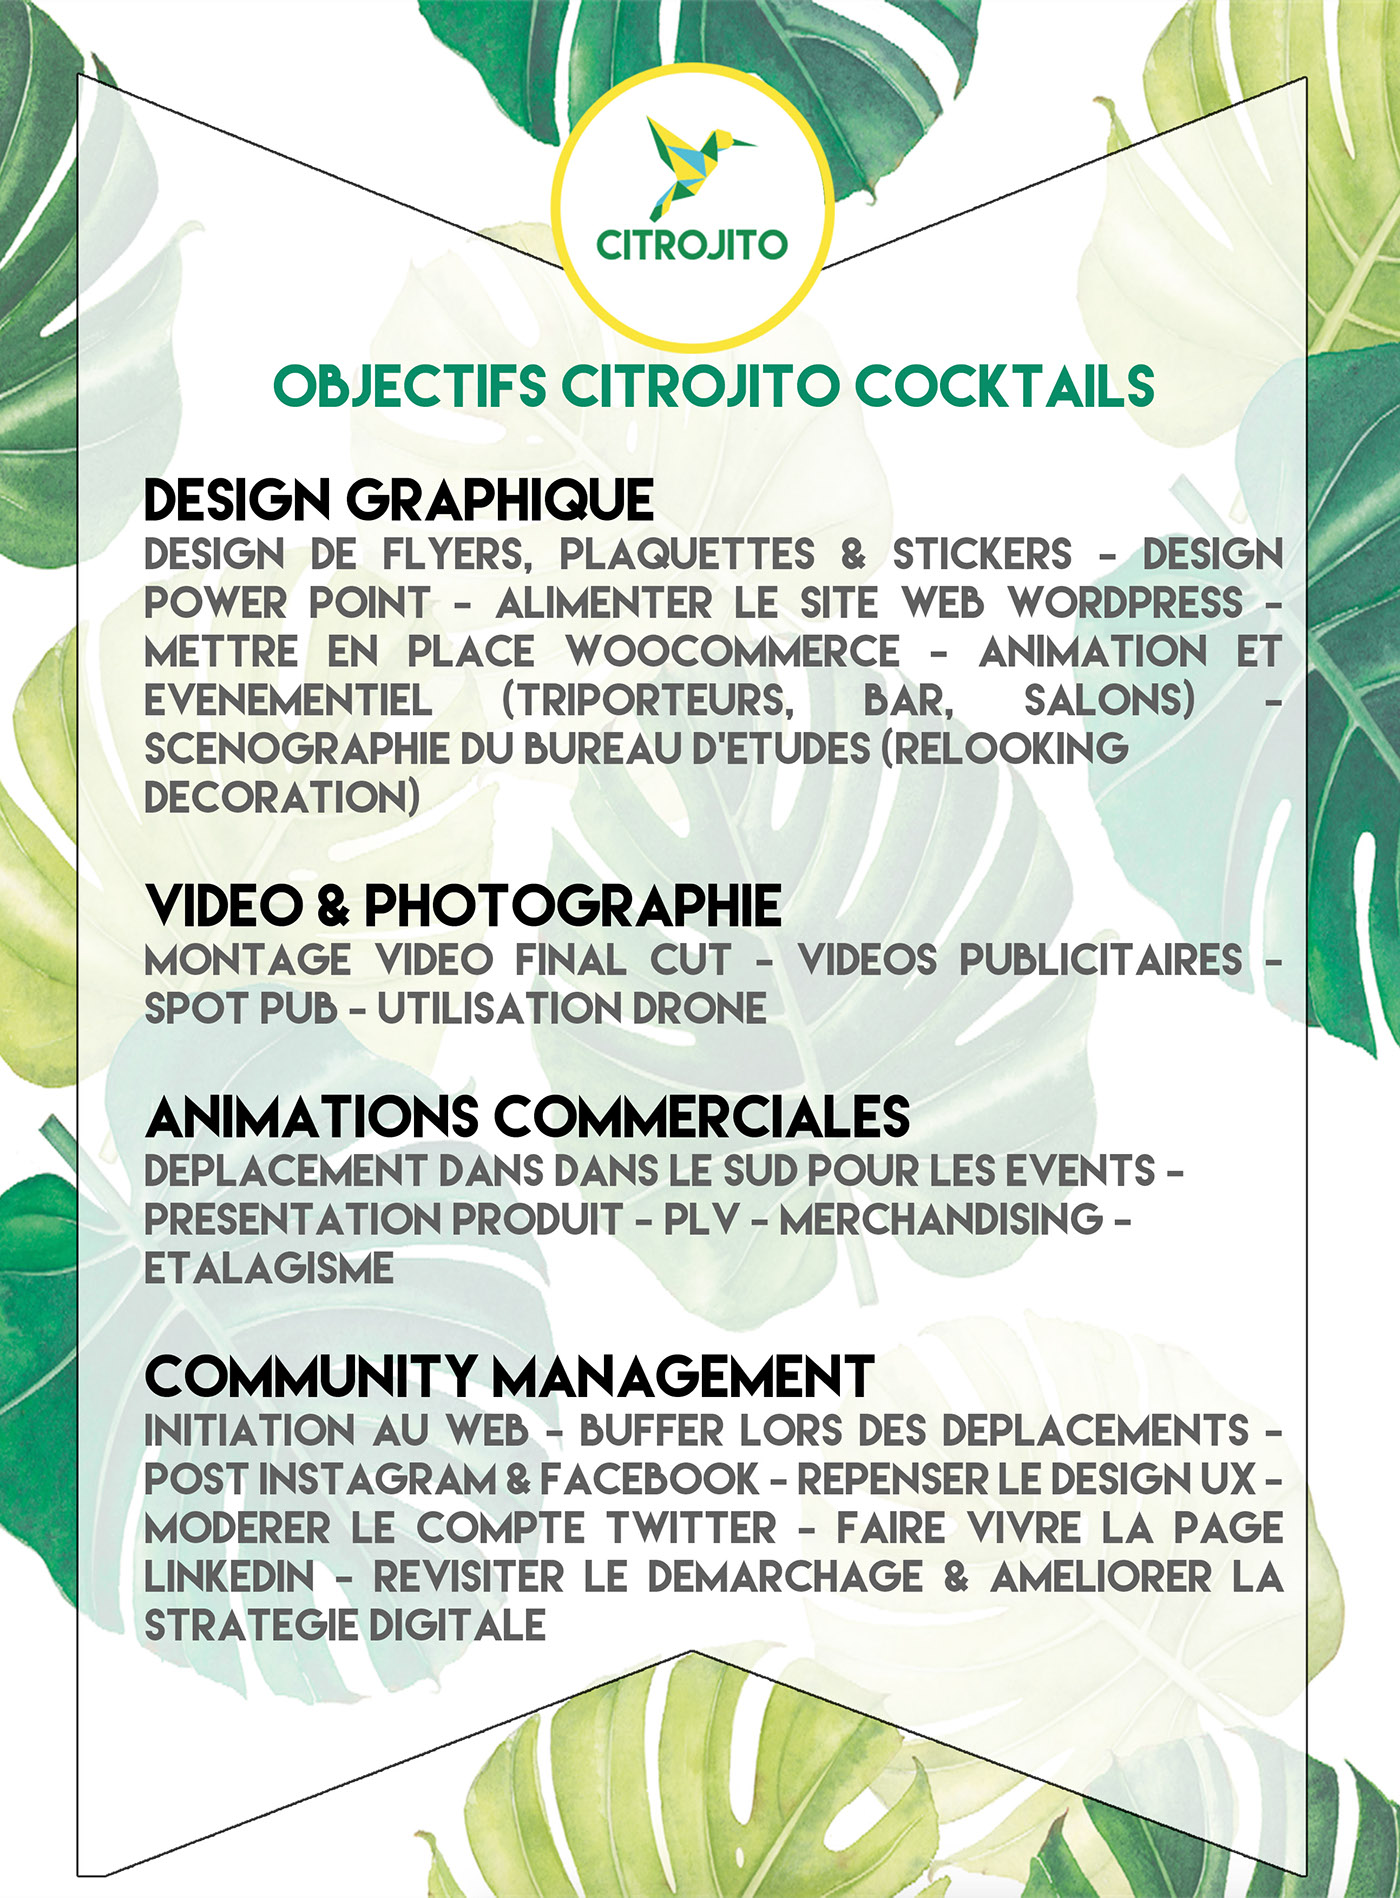 mojito cocktails brand lyon madeinfrance innovation creative design graphic plaquette